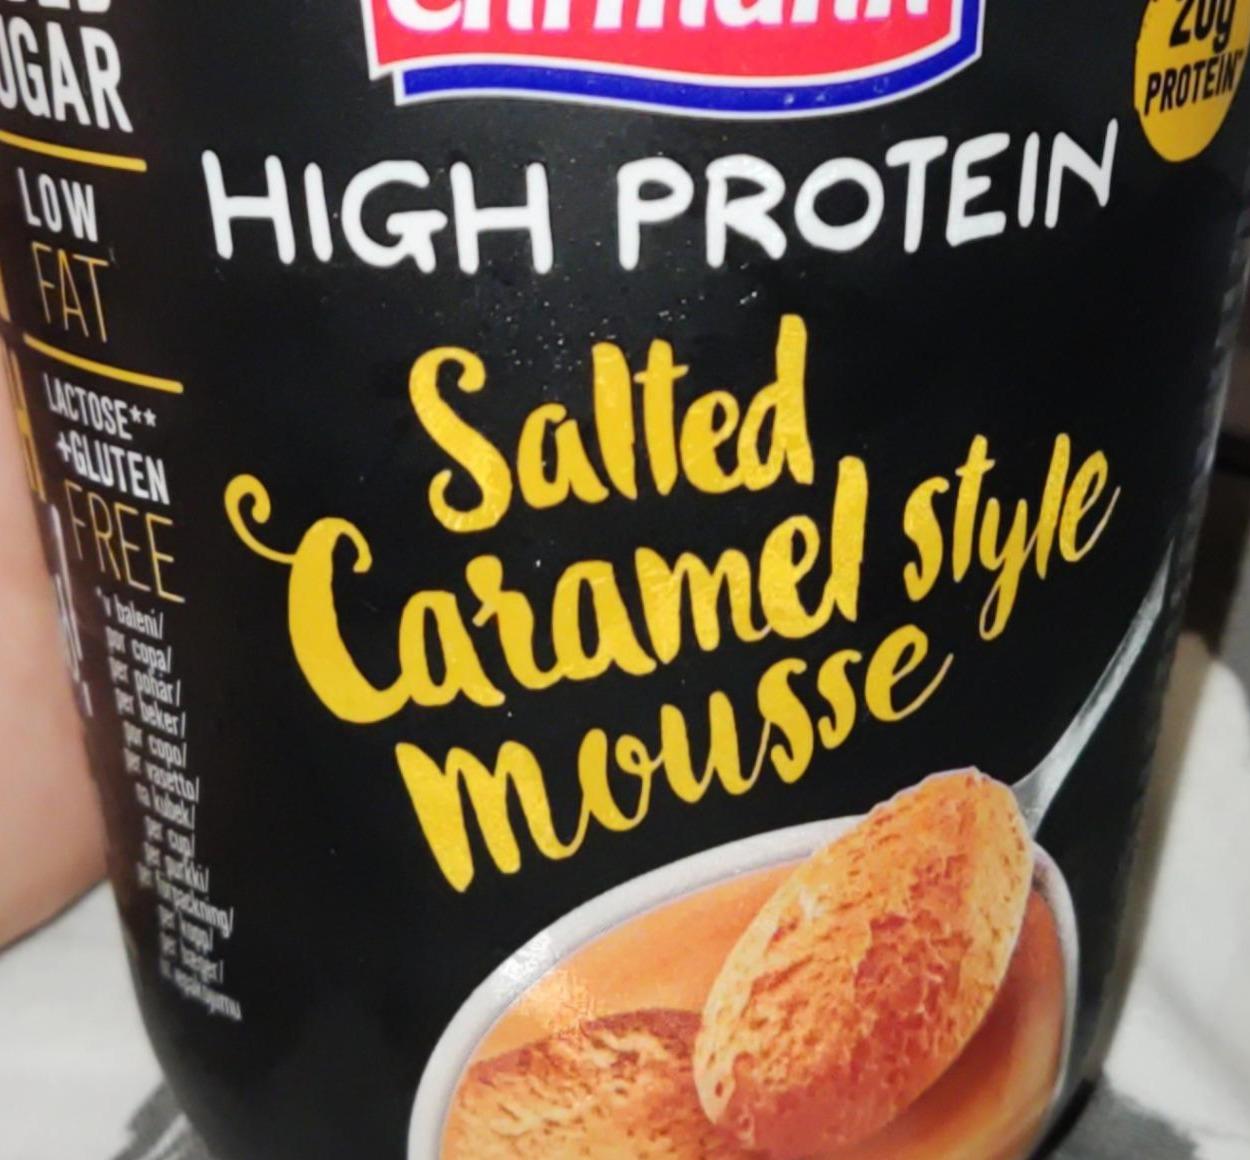 Képek - High protein salted caramel style mousse Ehrmann